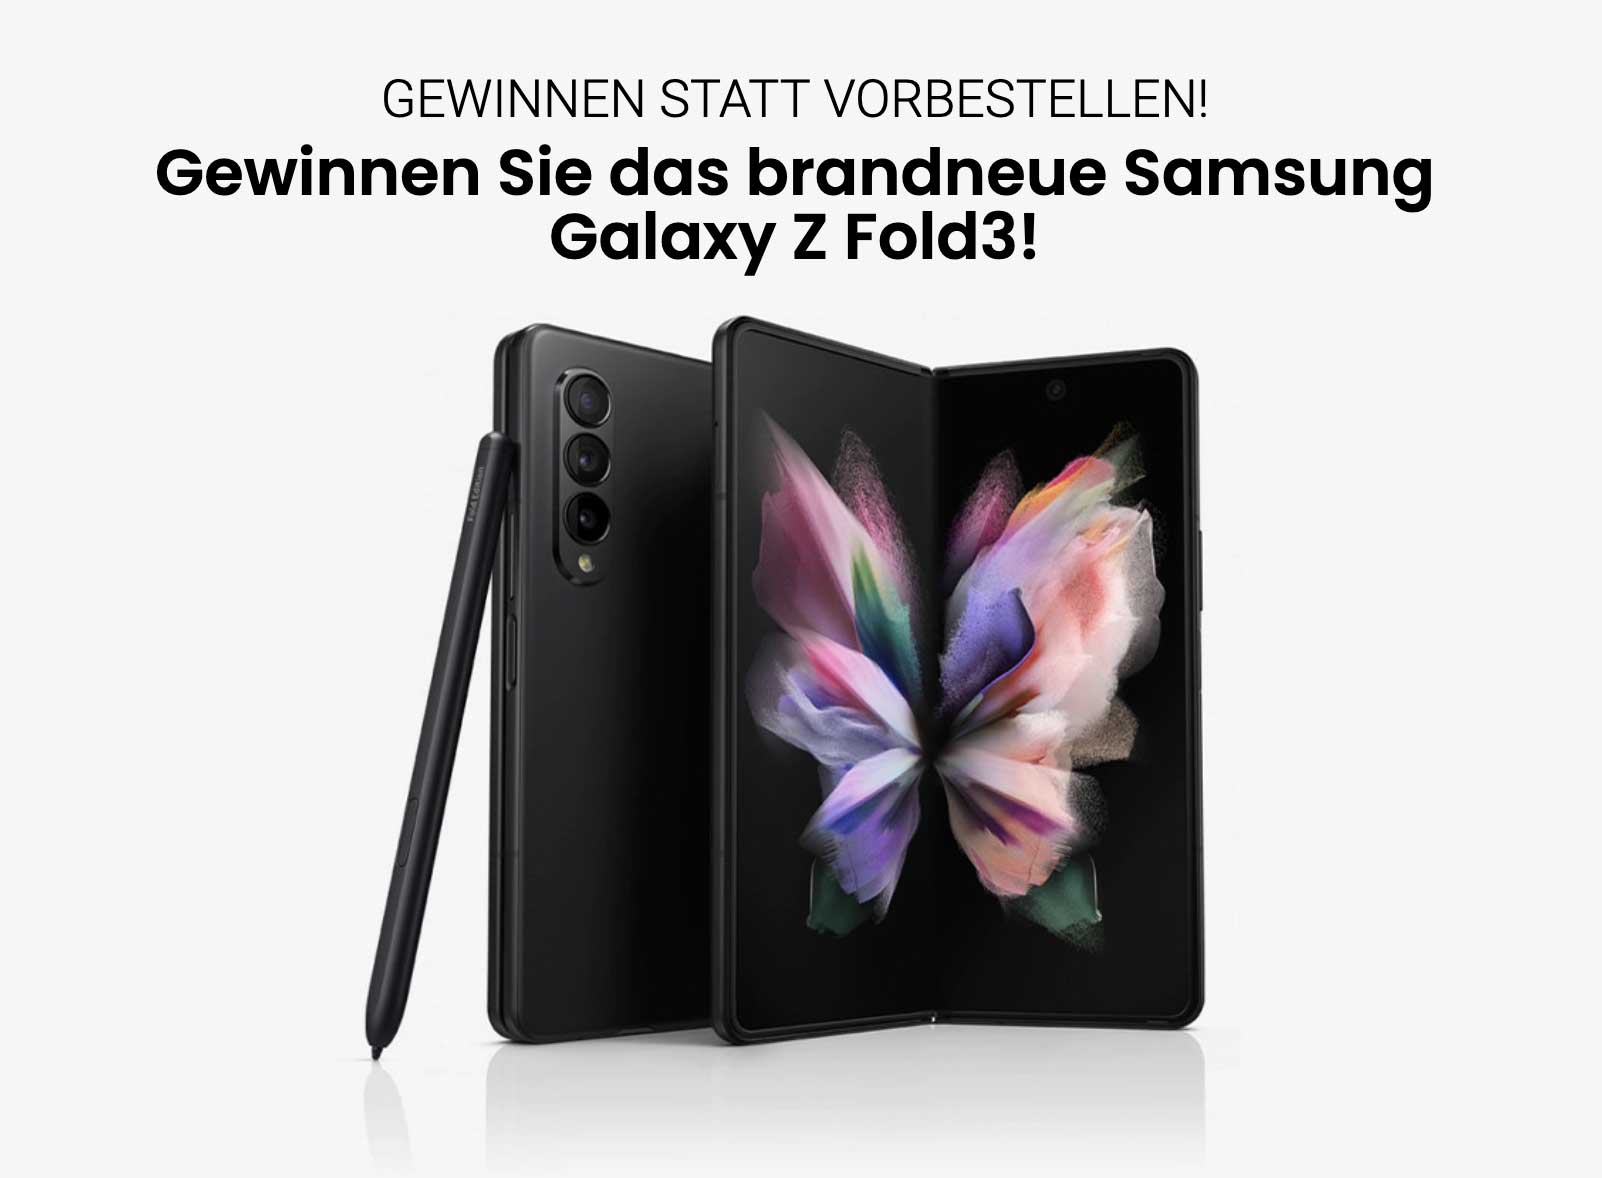 Samsung Galaxy Z Fold3 Gewinnspiel